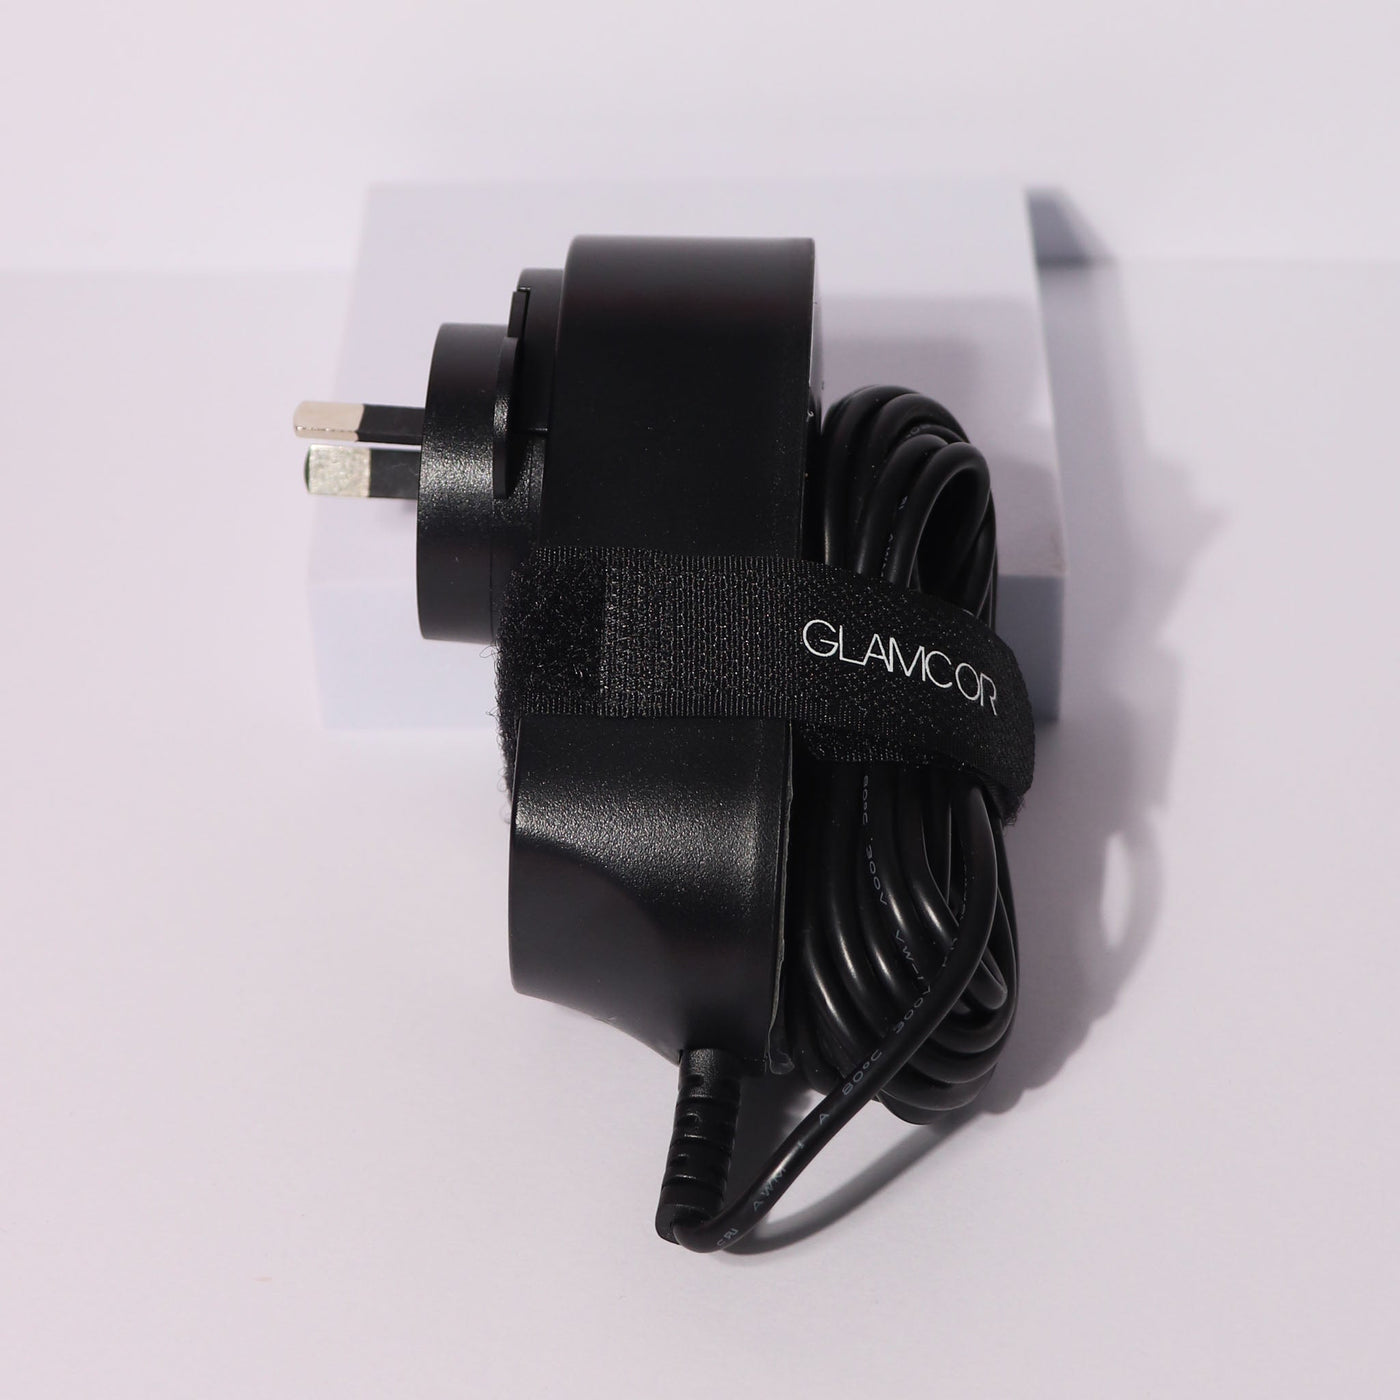 Glamcor Power Supply (AU)